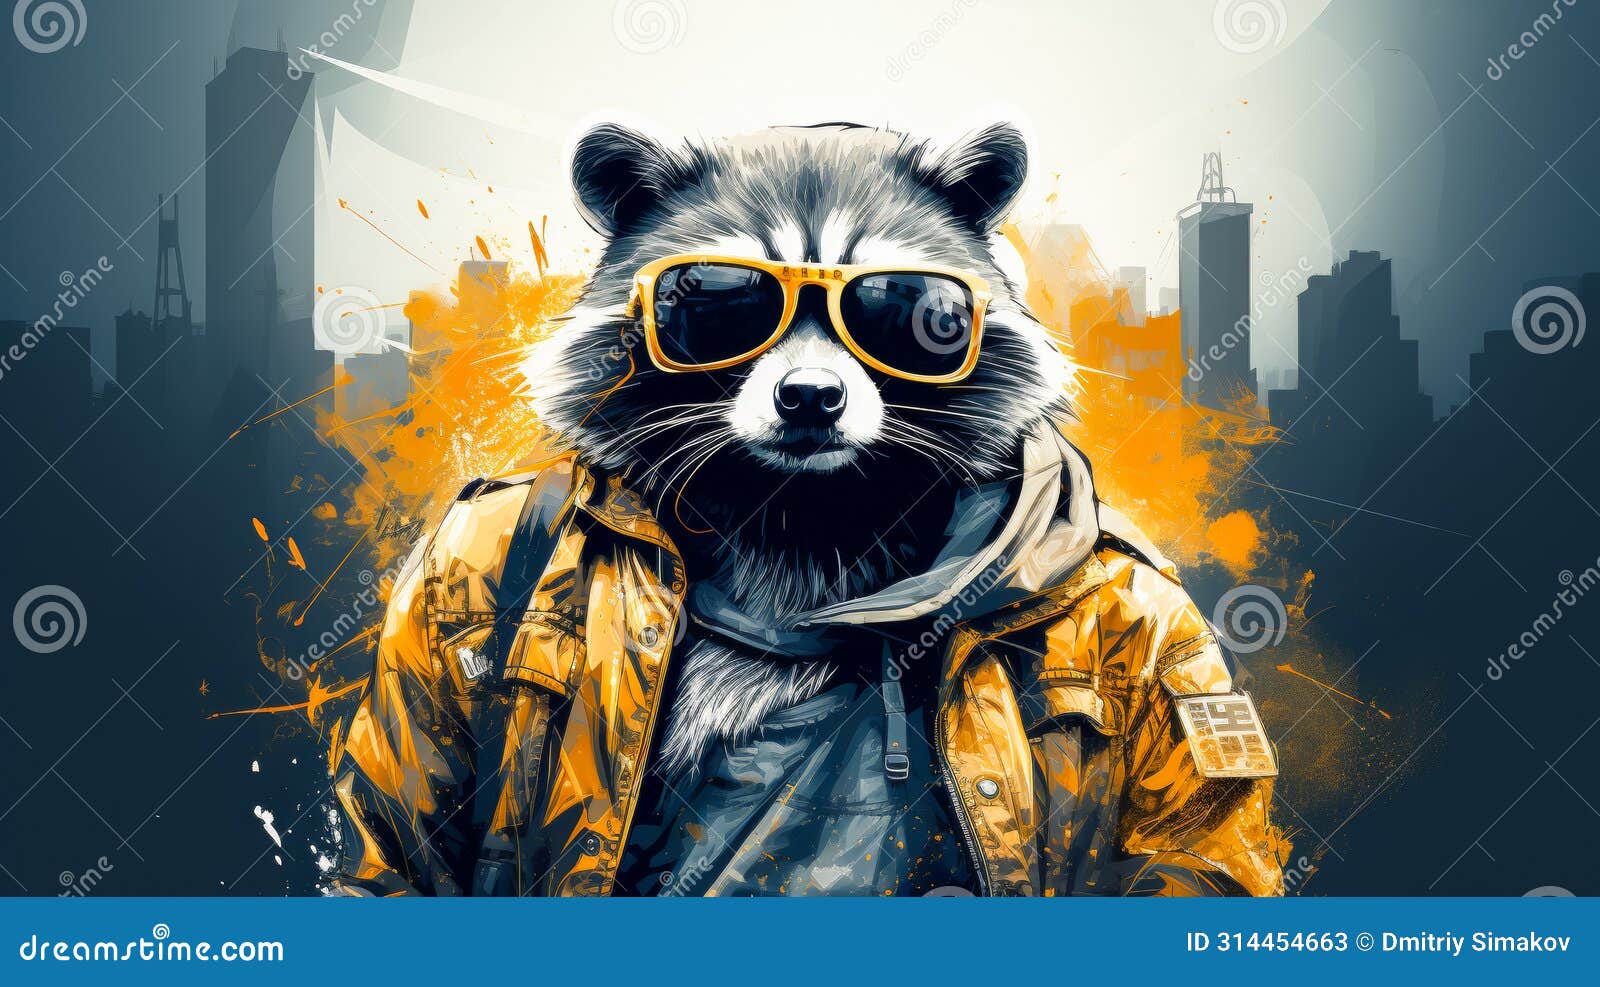 envision a fashionable raccoon